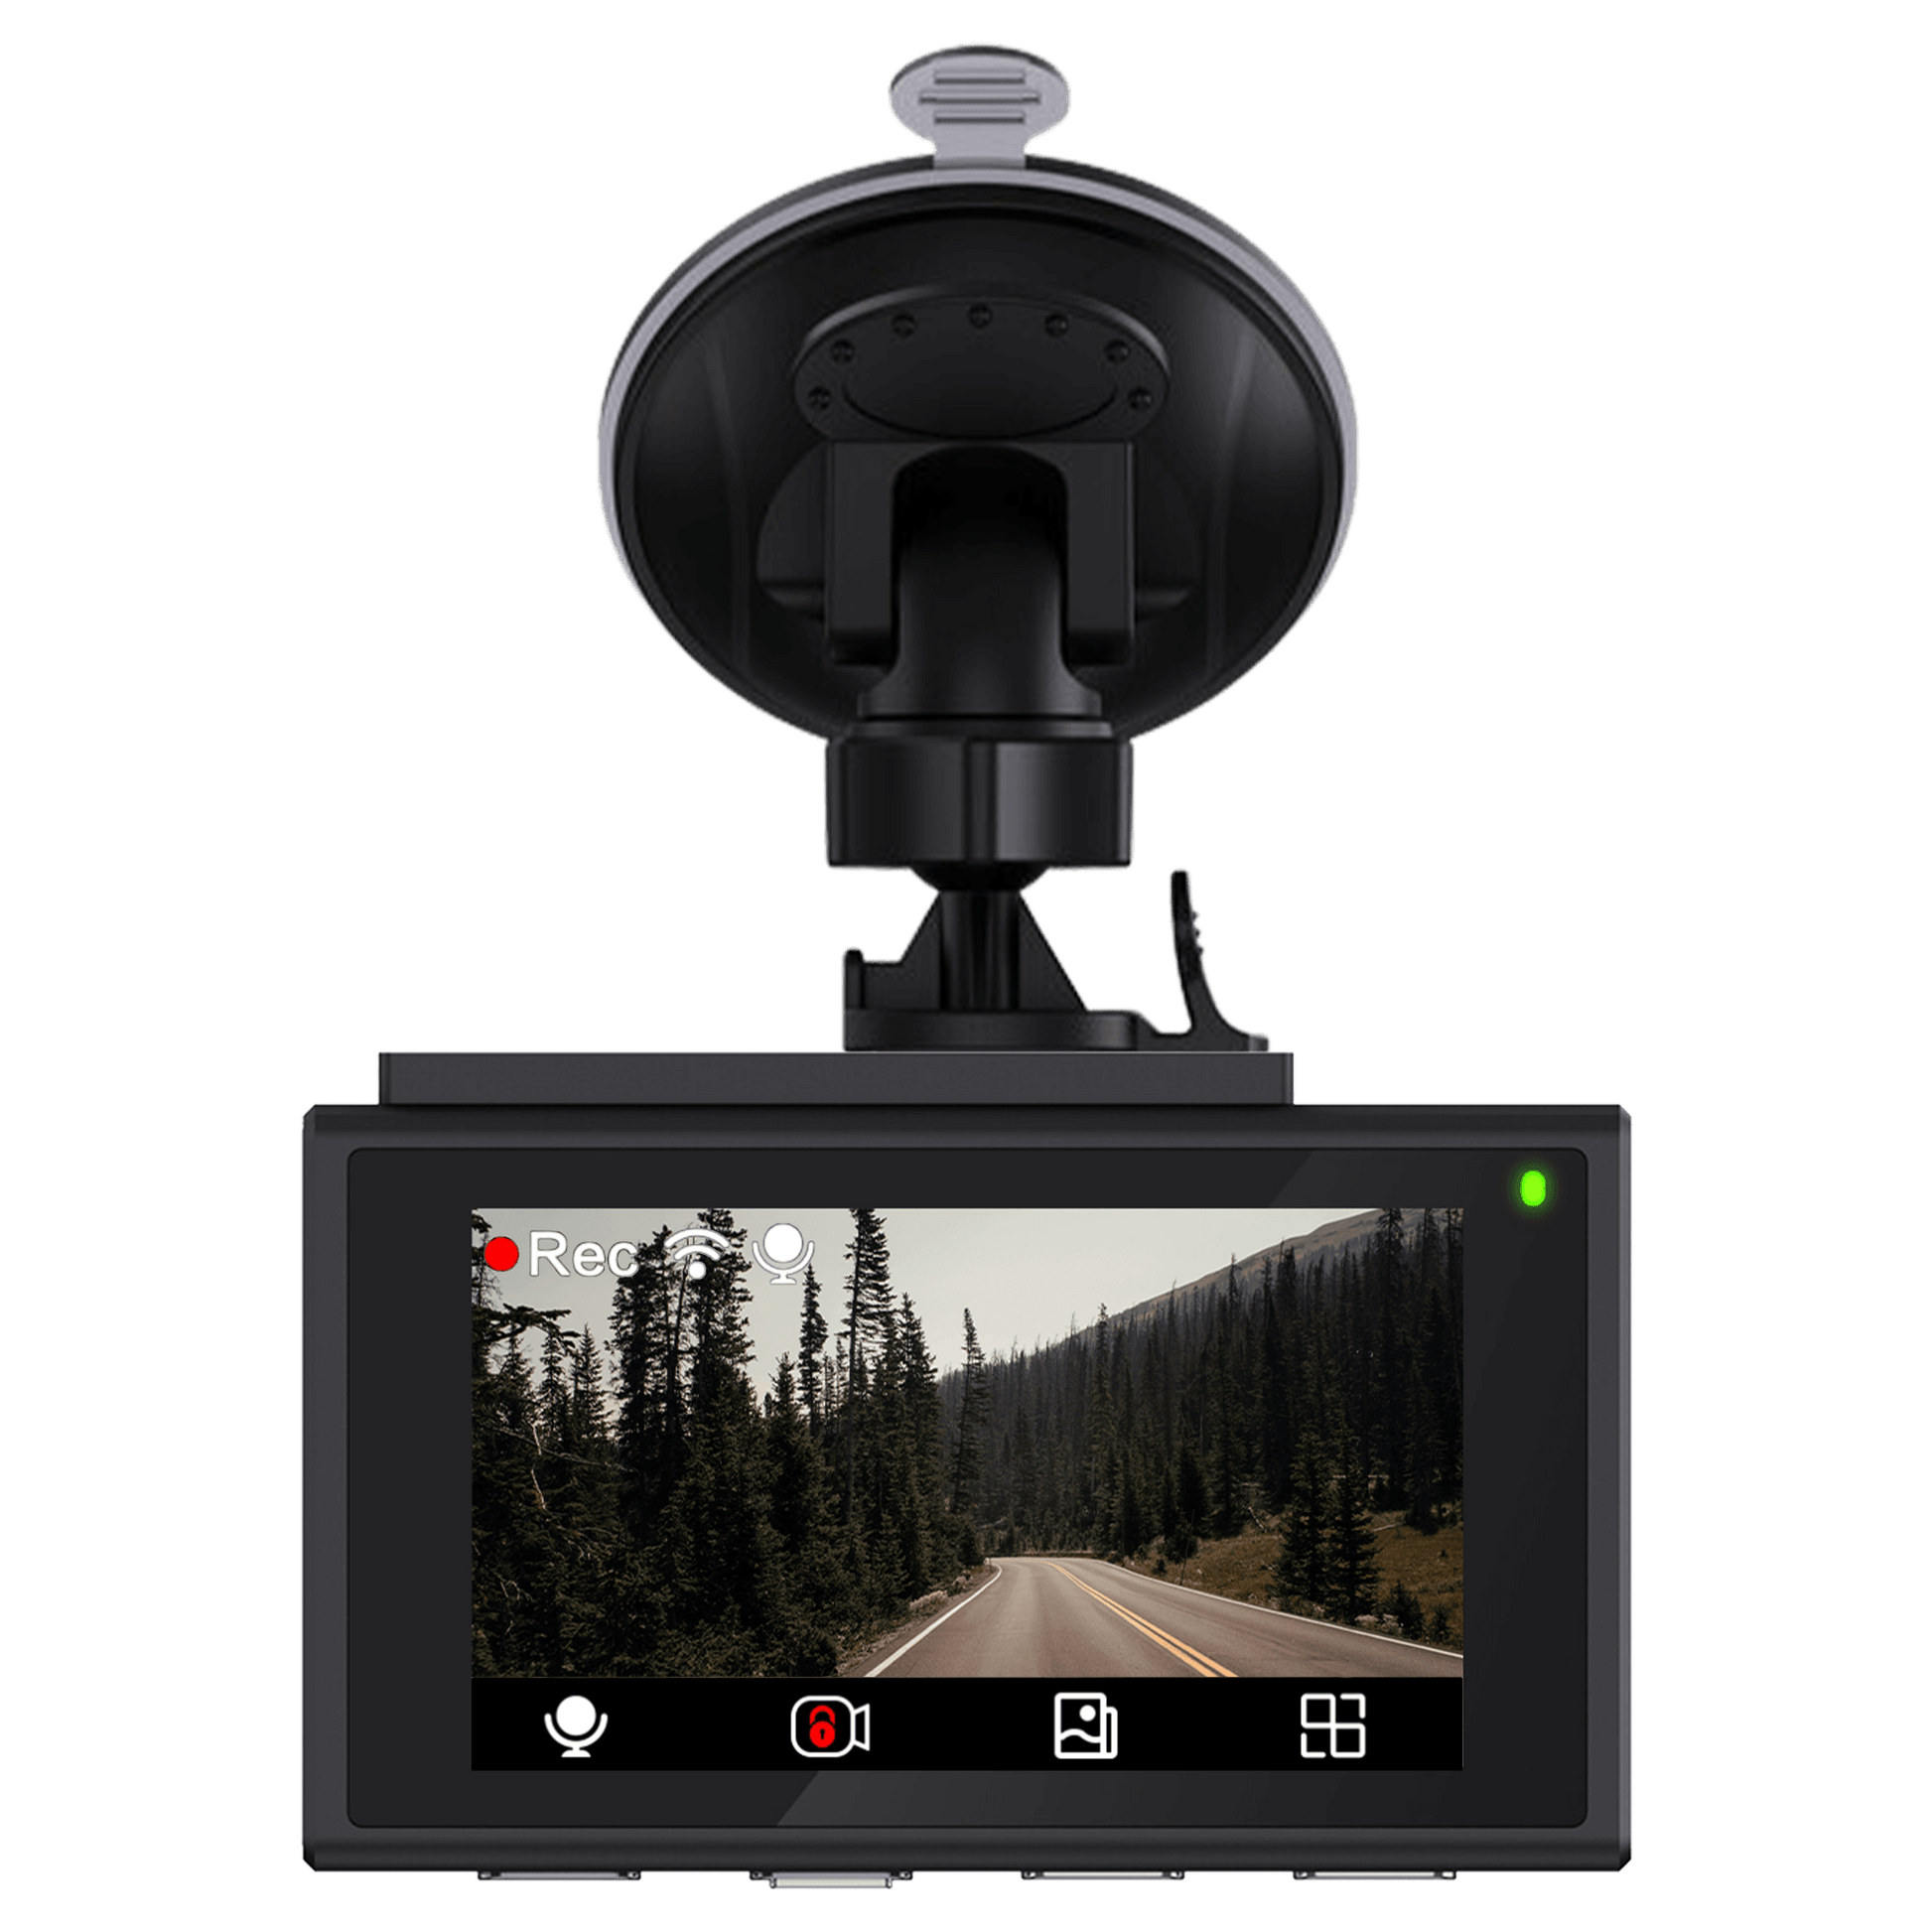 IZI DRIVE Plus 4K Dual Channel Dash Camera with GPS, 3inch FHD Screen, 170° Wide Angle, Night Vision, G-Sensor, Wifi, ADAS, Emergency Recording - izi-cart